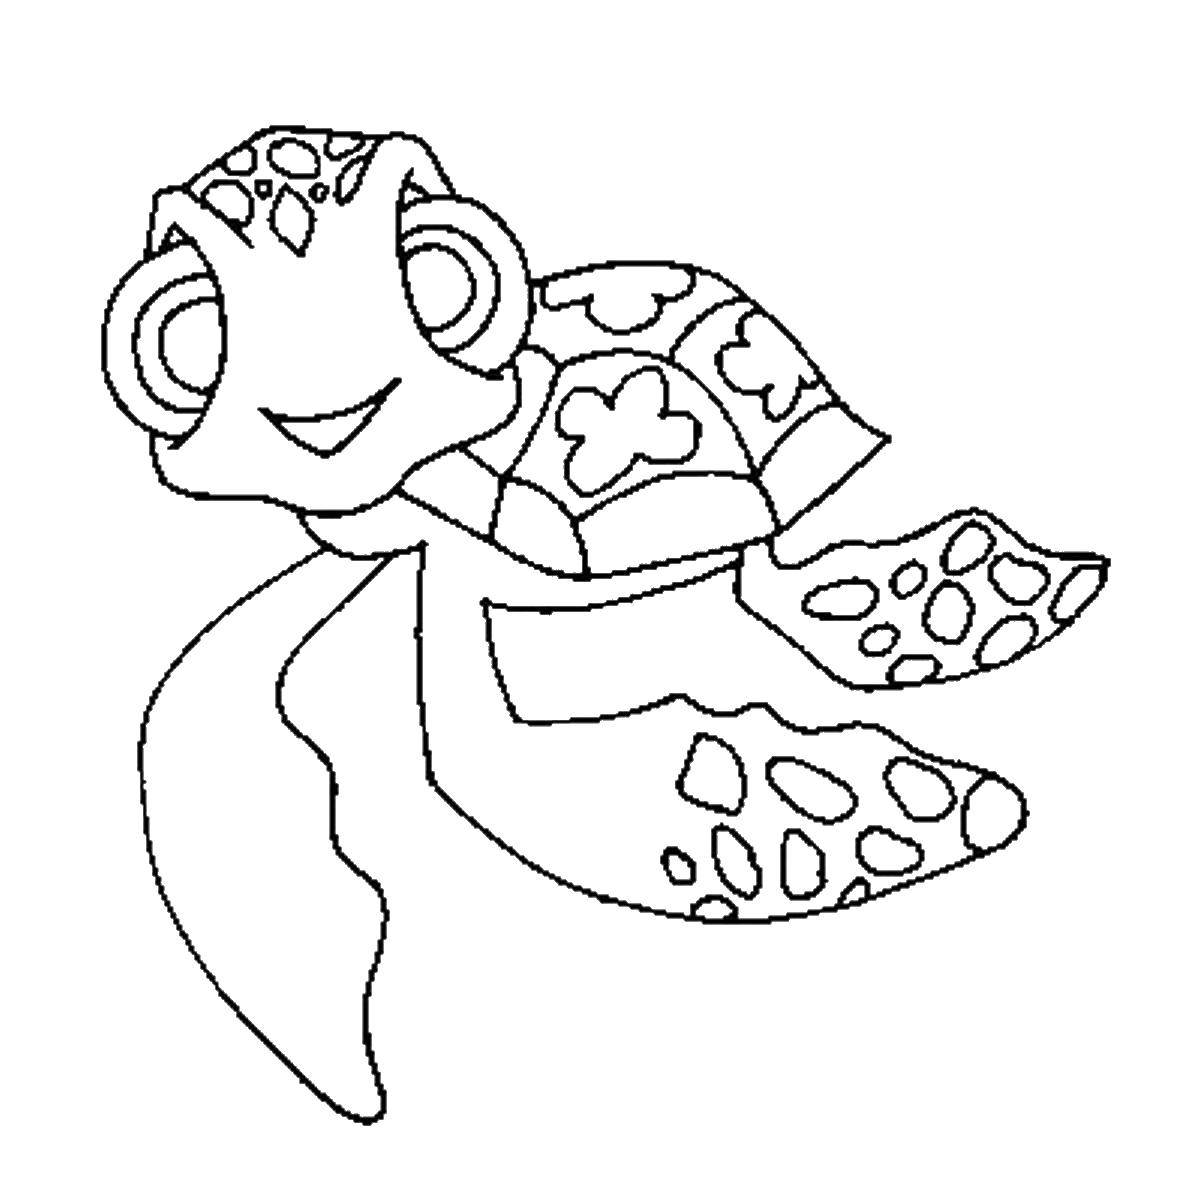 Coloring Sea turtle. Category reptiles. Tags:  Reptile, turtle.